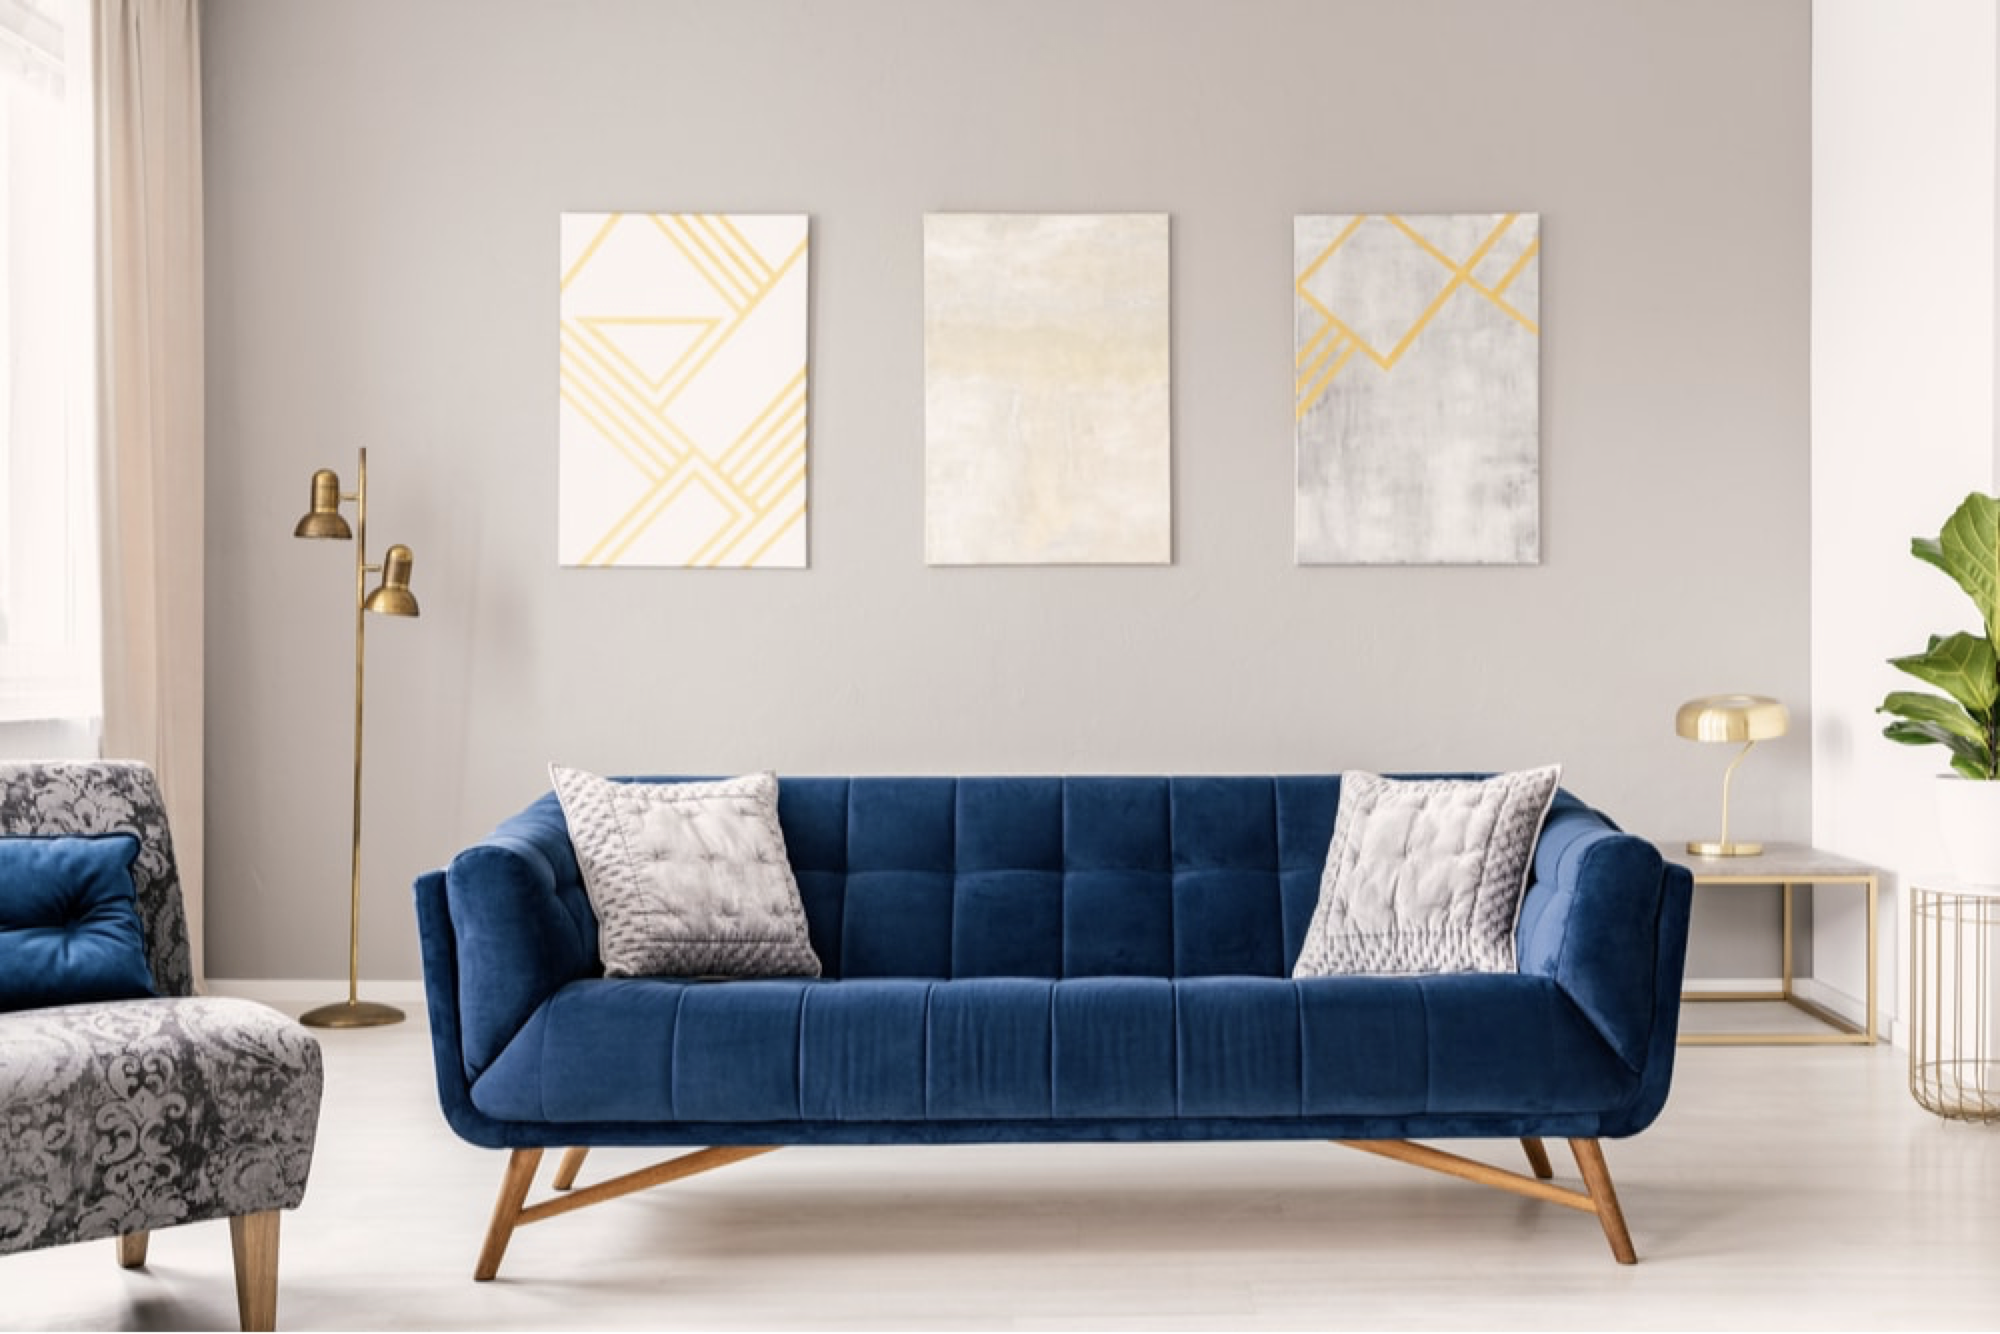 Decorating Around A Navy Blue Sofa | 10 Unique Ideas